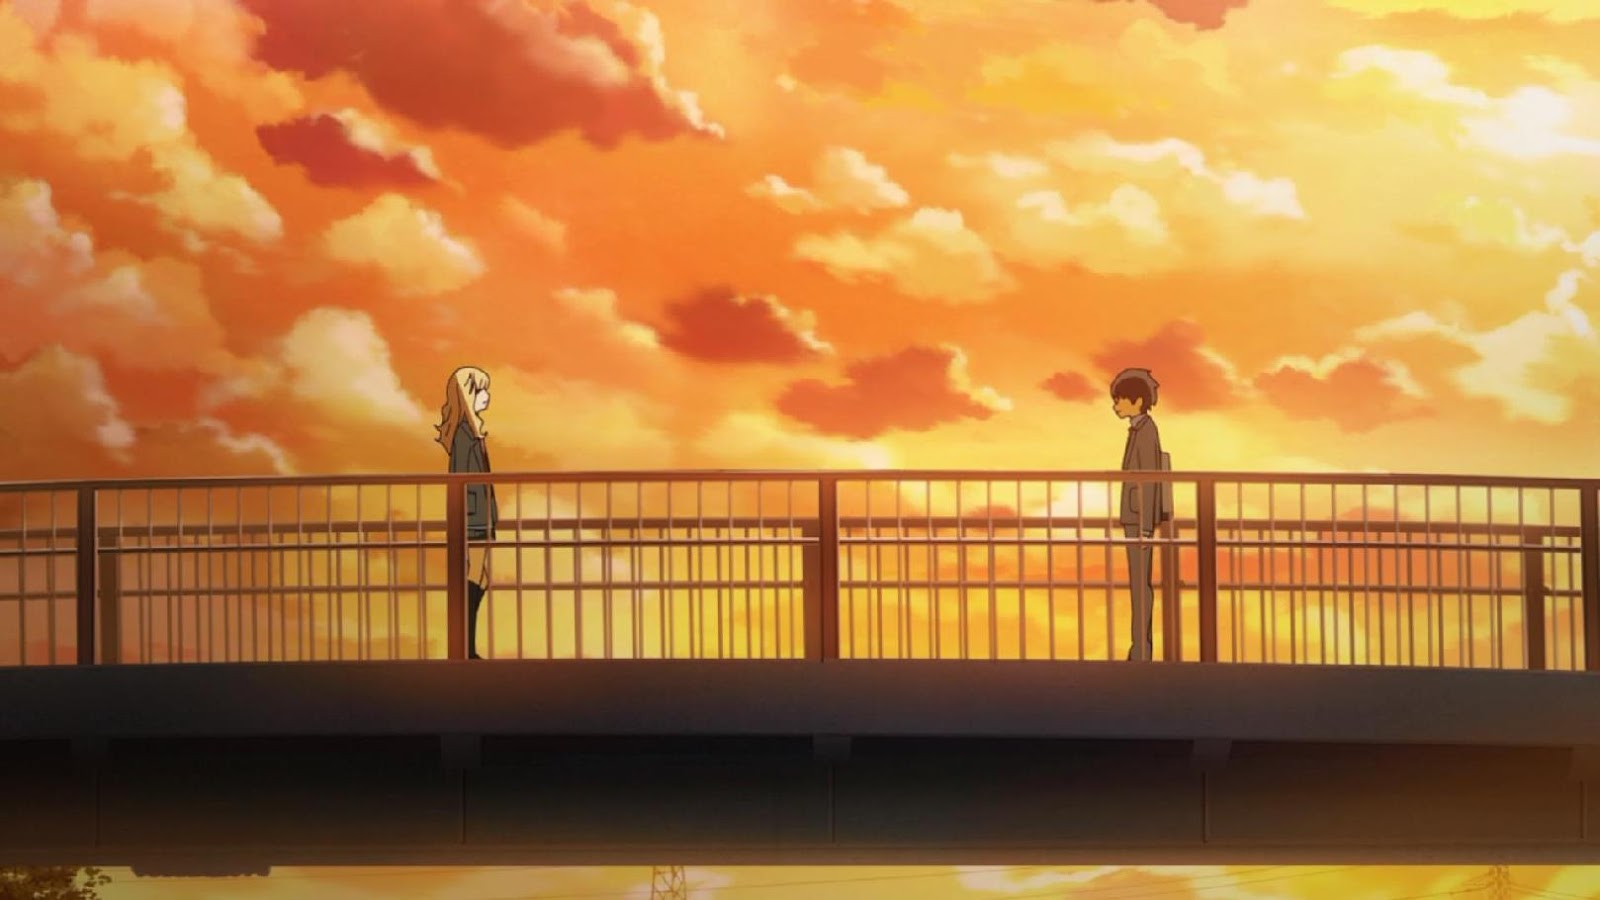 Shigatsu wa Kimi no Uso Episode 13 四月は君の嘘 Anime Review - Only More Sadness  